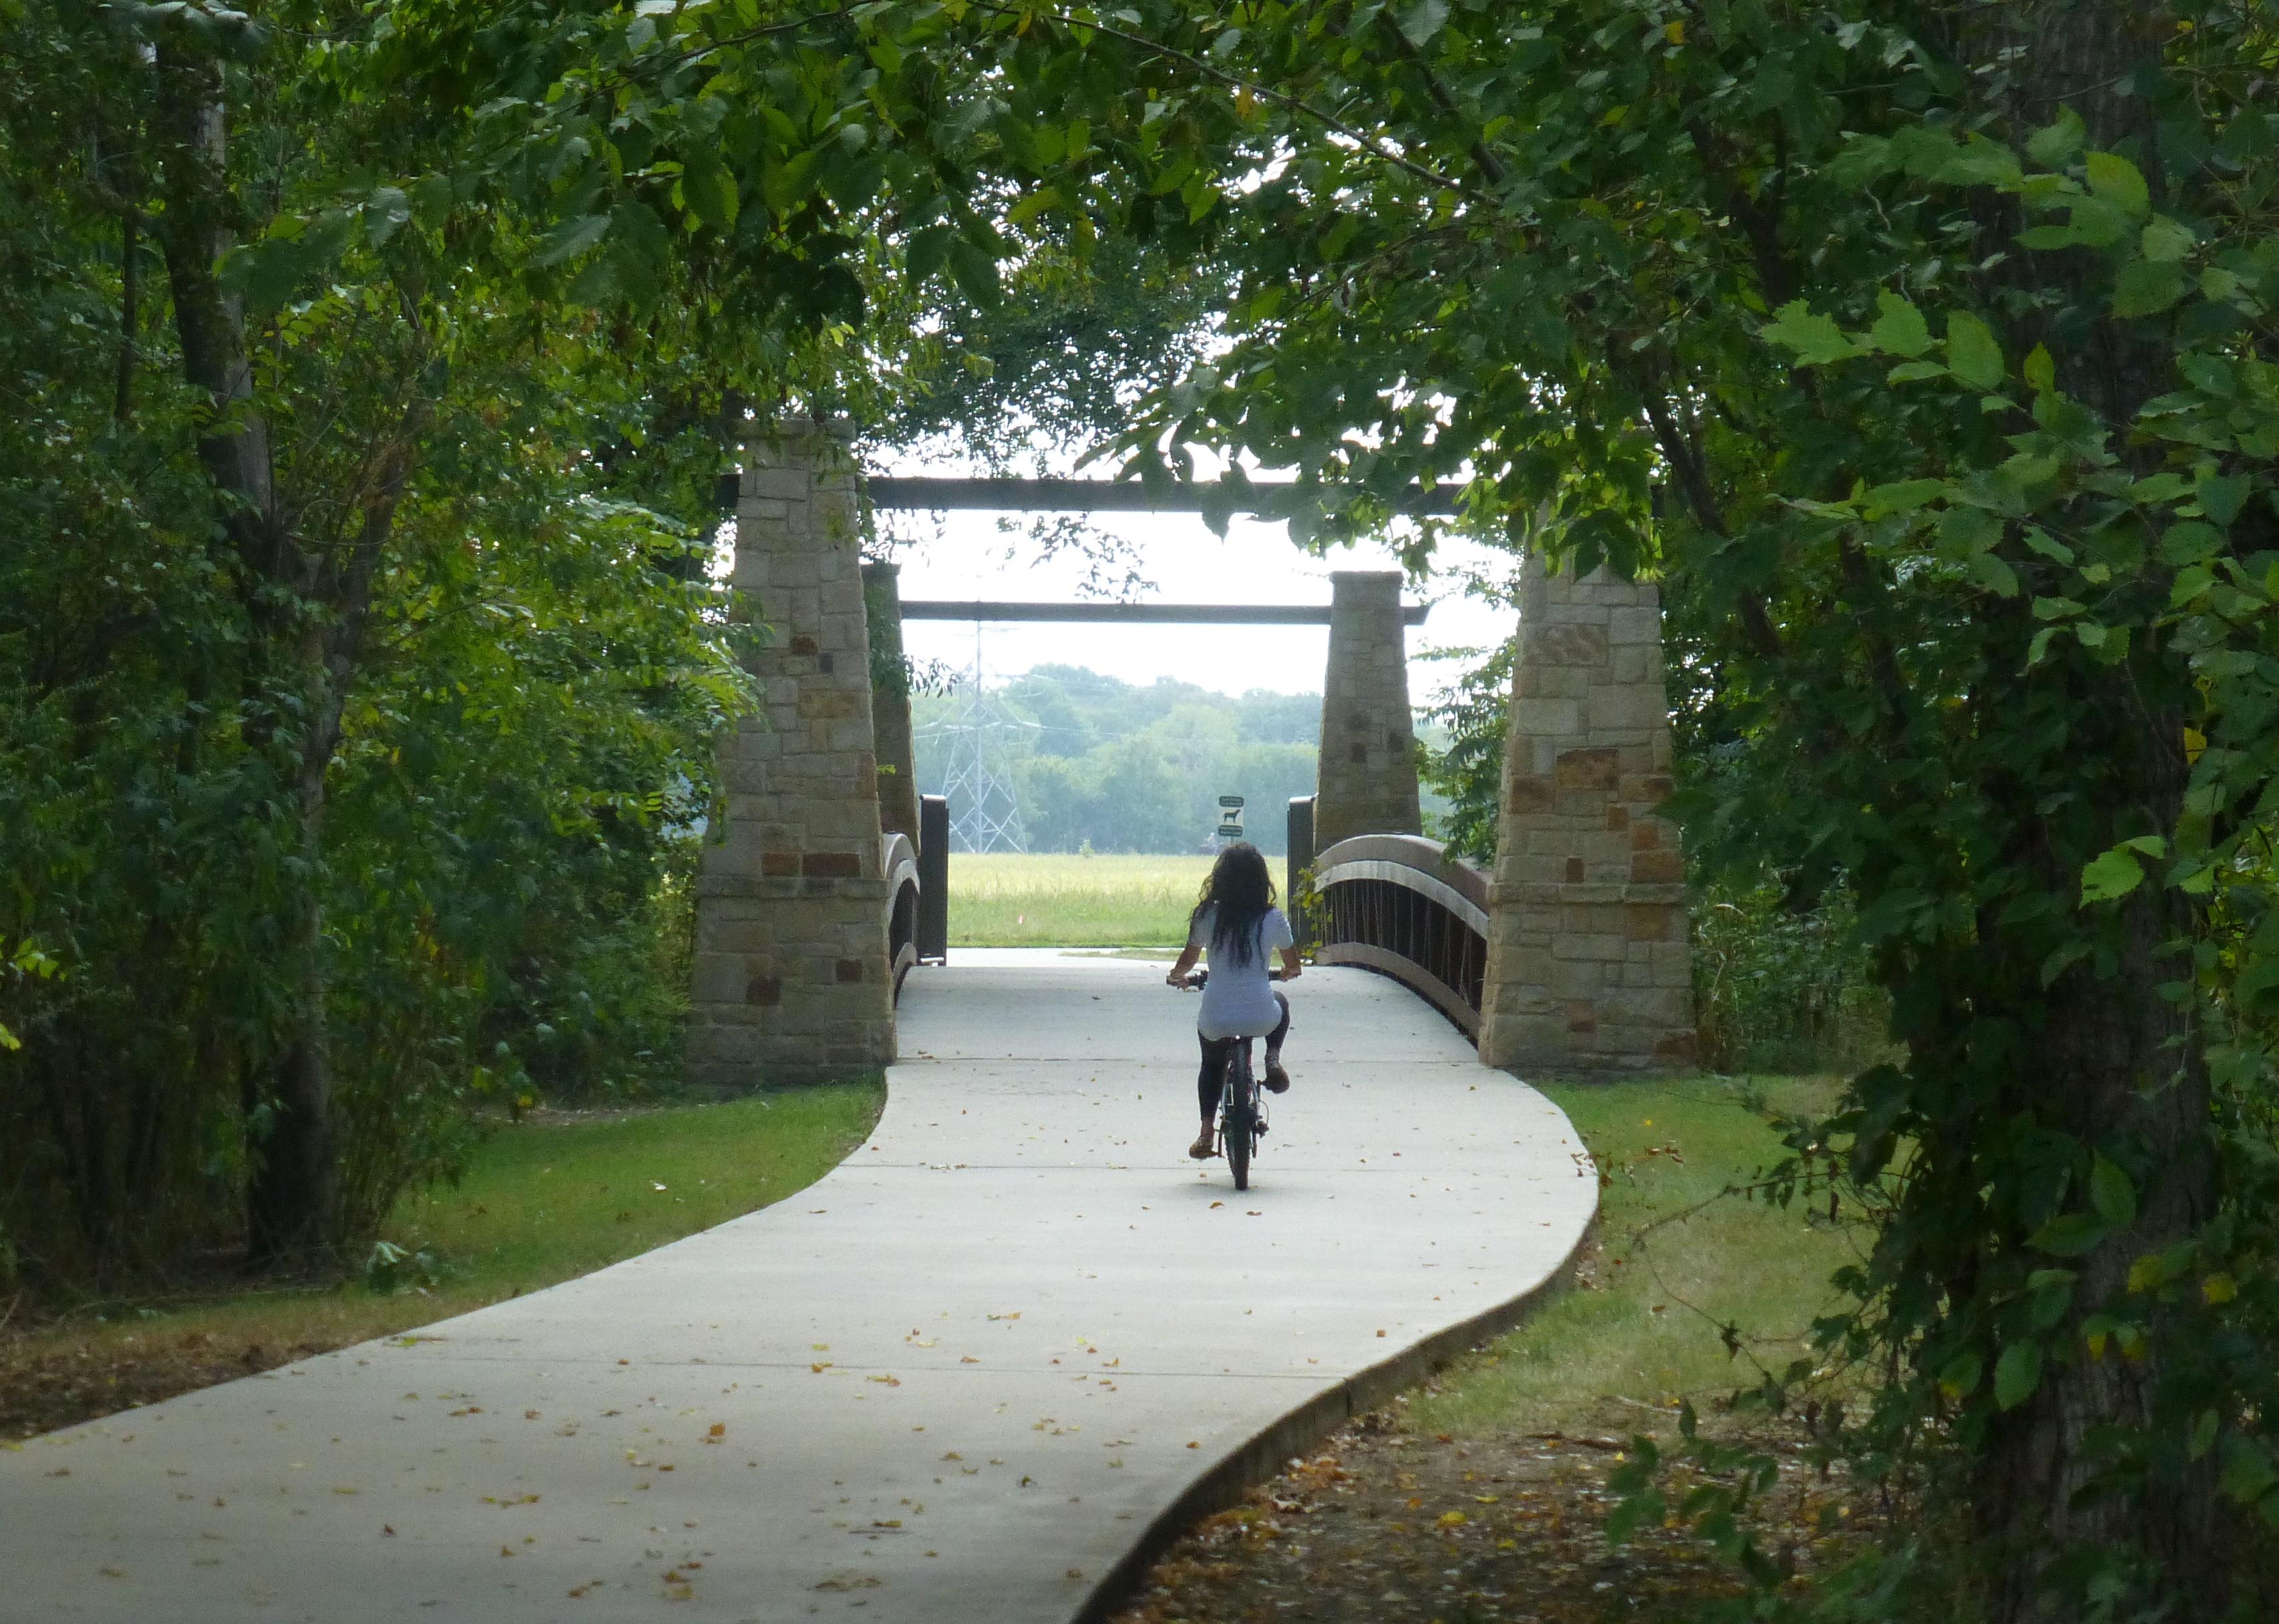 A woman riding a bike in a park.